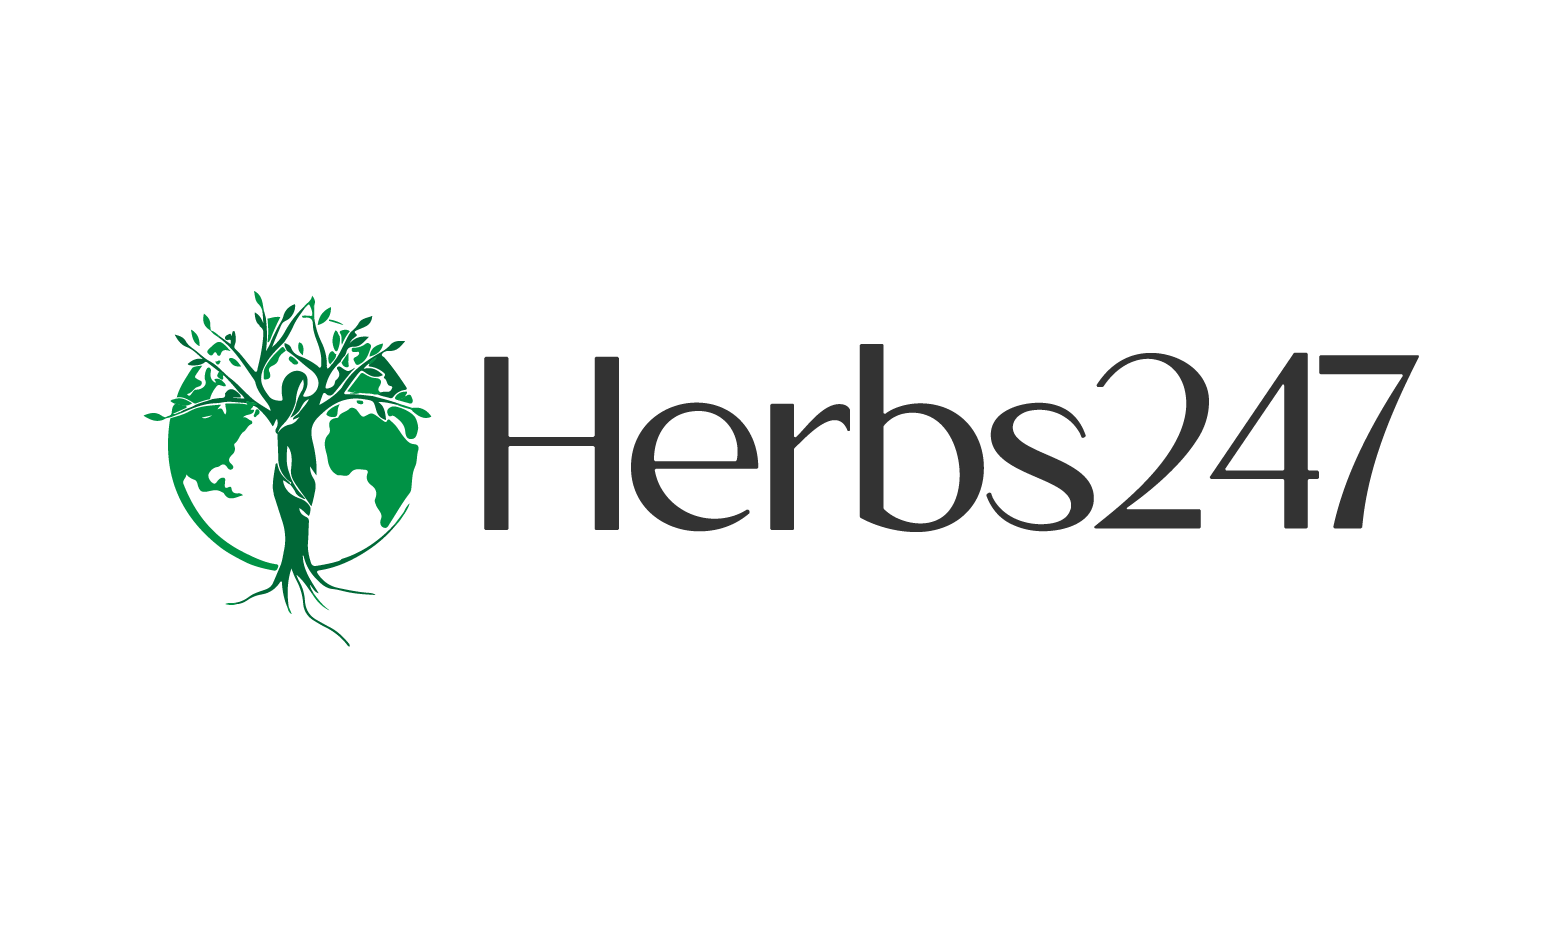 Herbs247.com - Creative brandable domain for sale